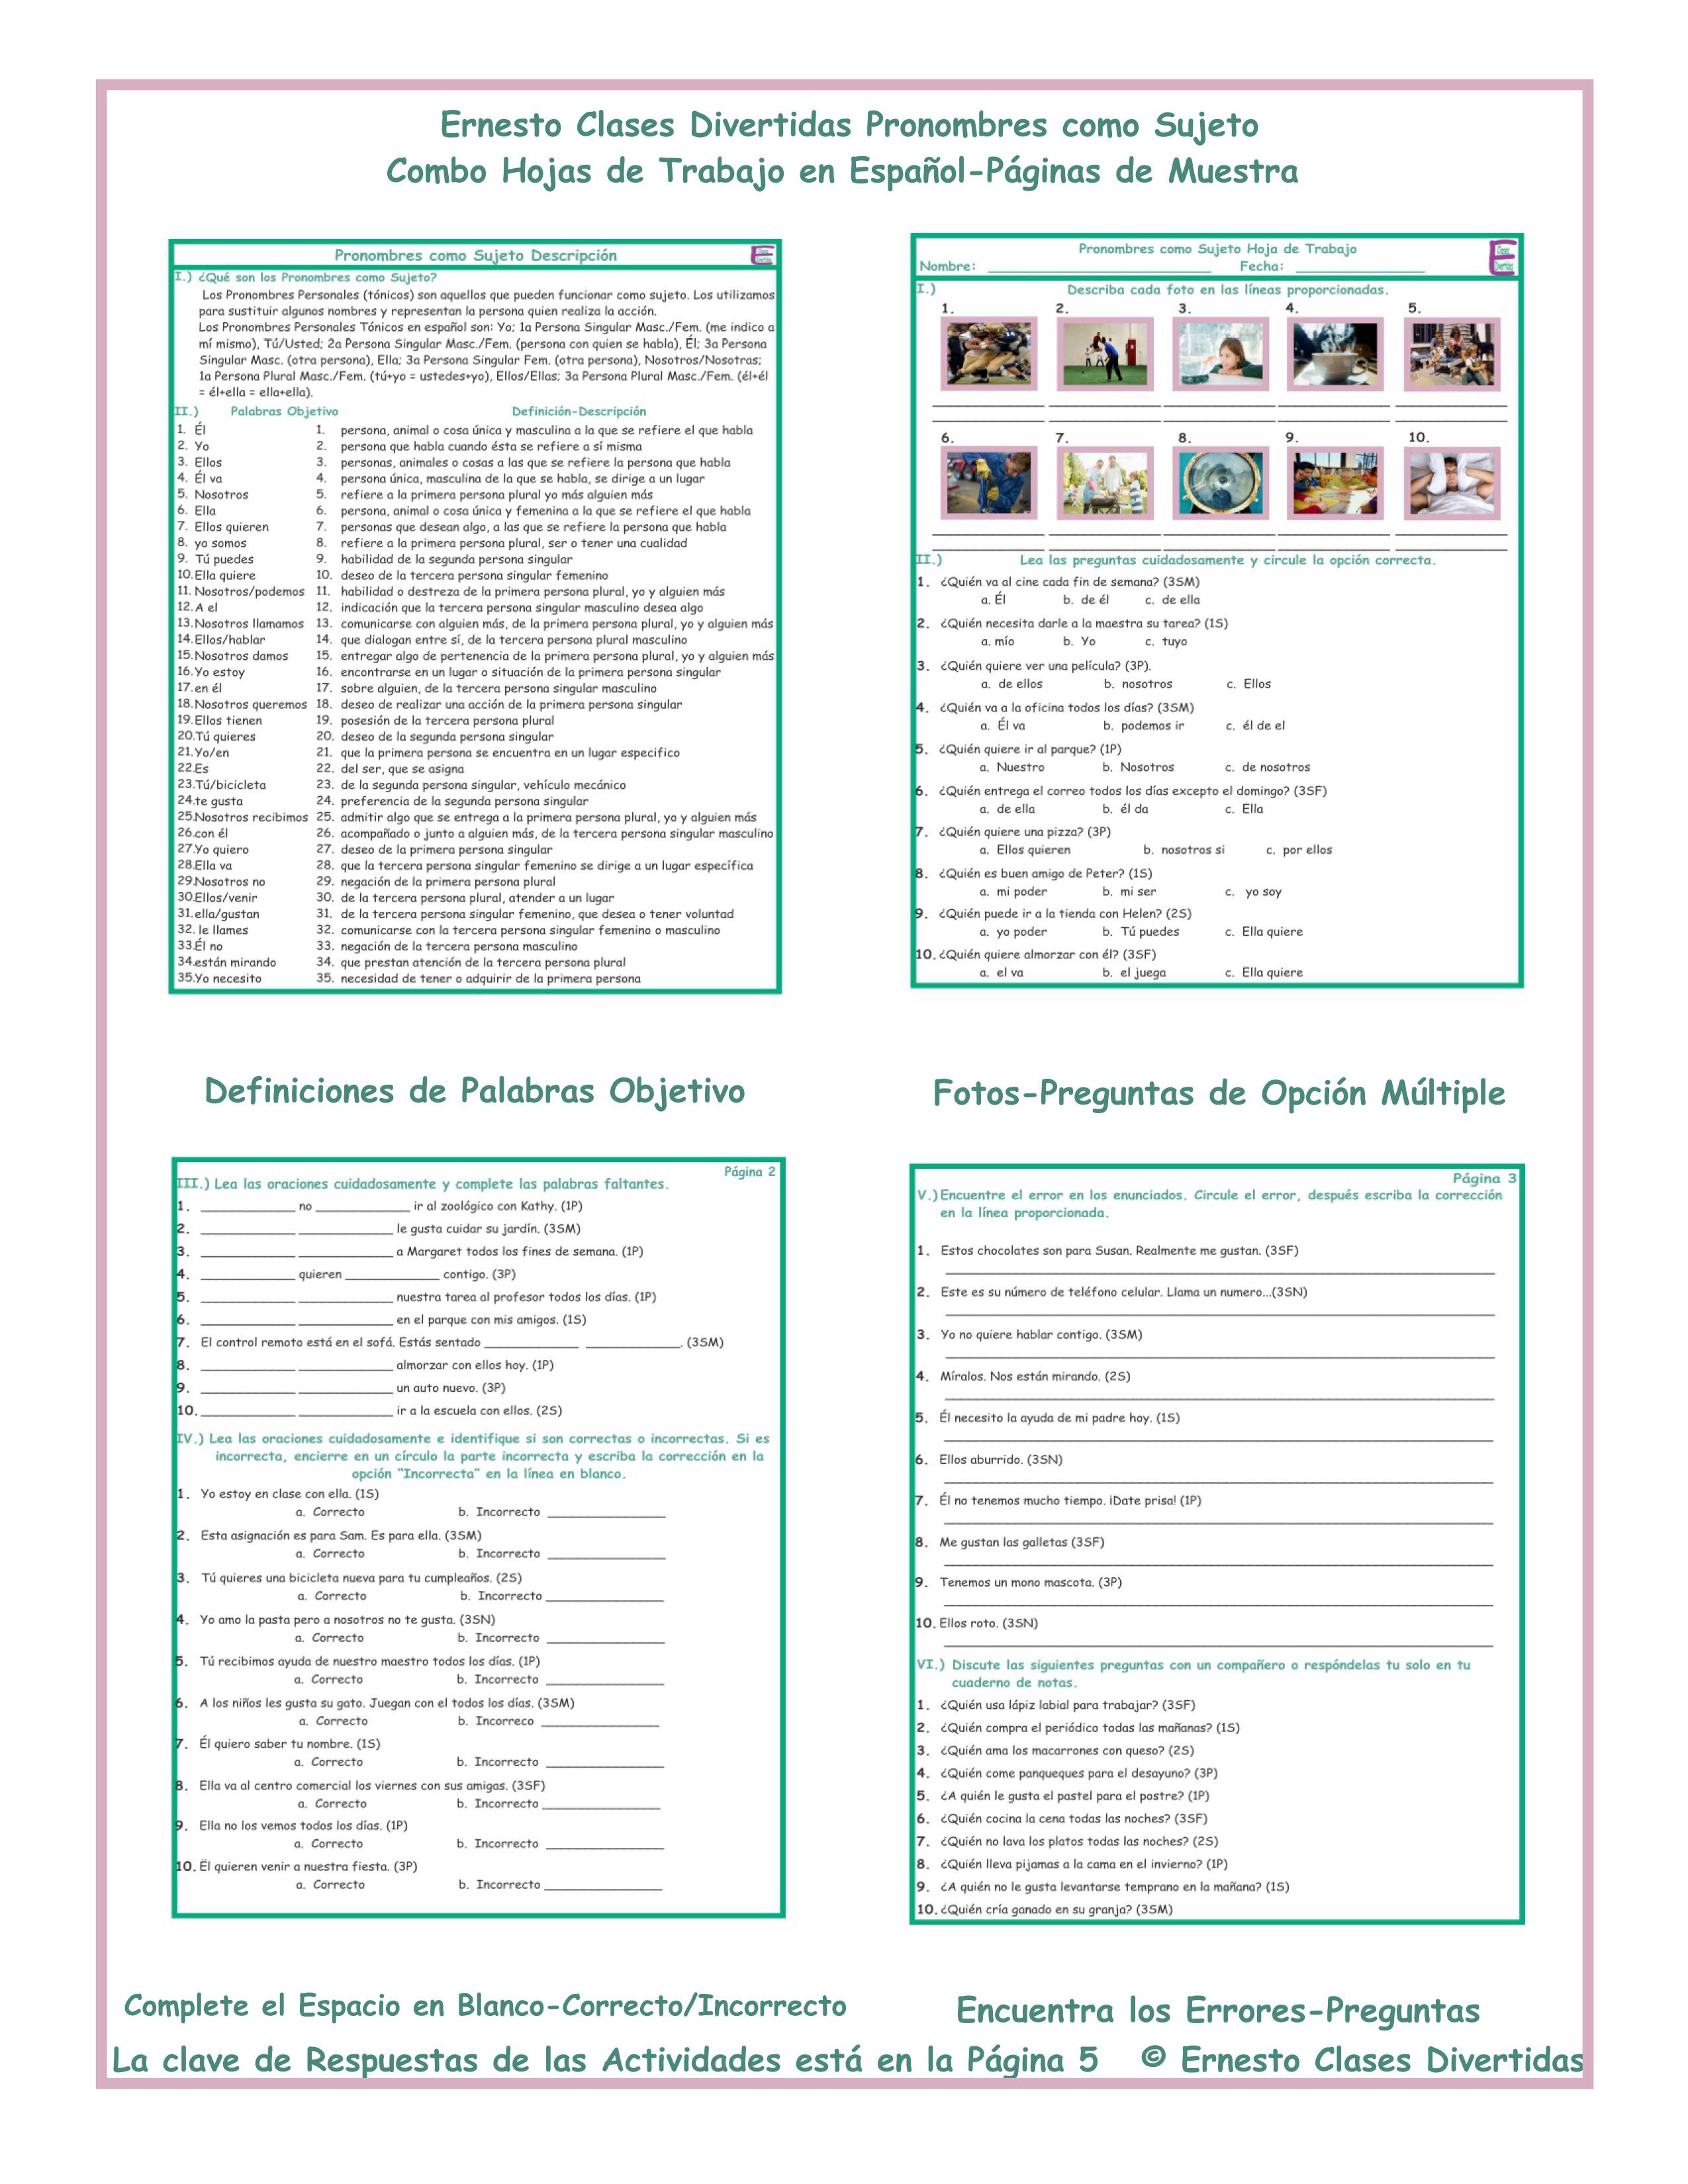 subject-and-object-pronouns-worksheet-englishlinx-board-free-printable-pronoun-worksheets